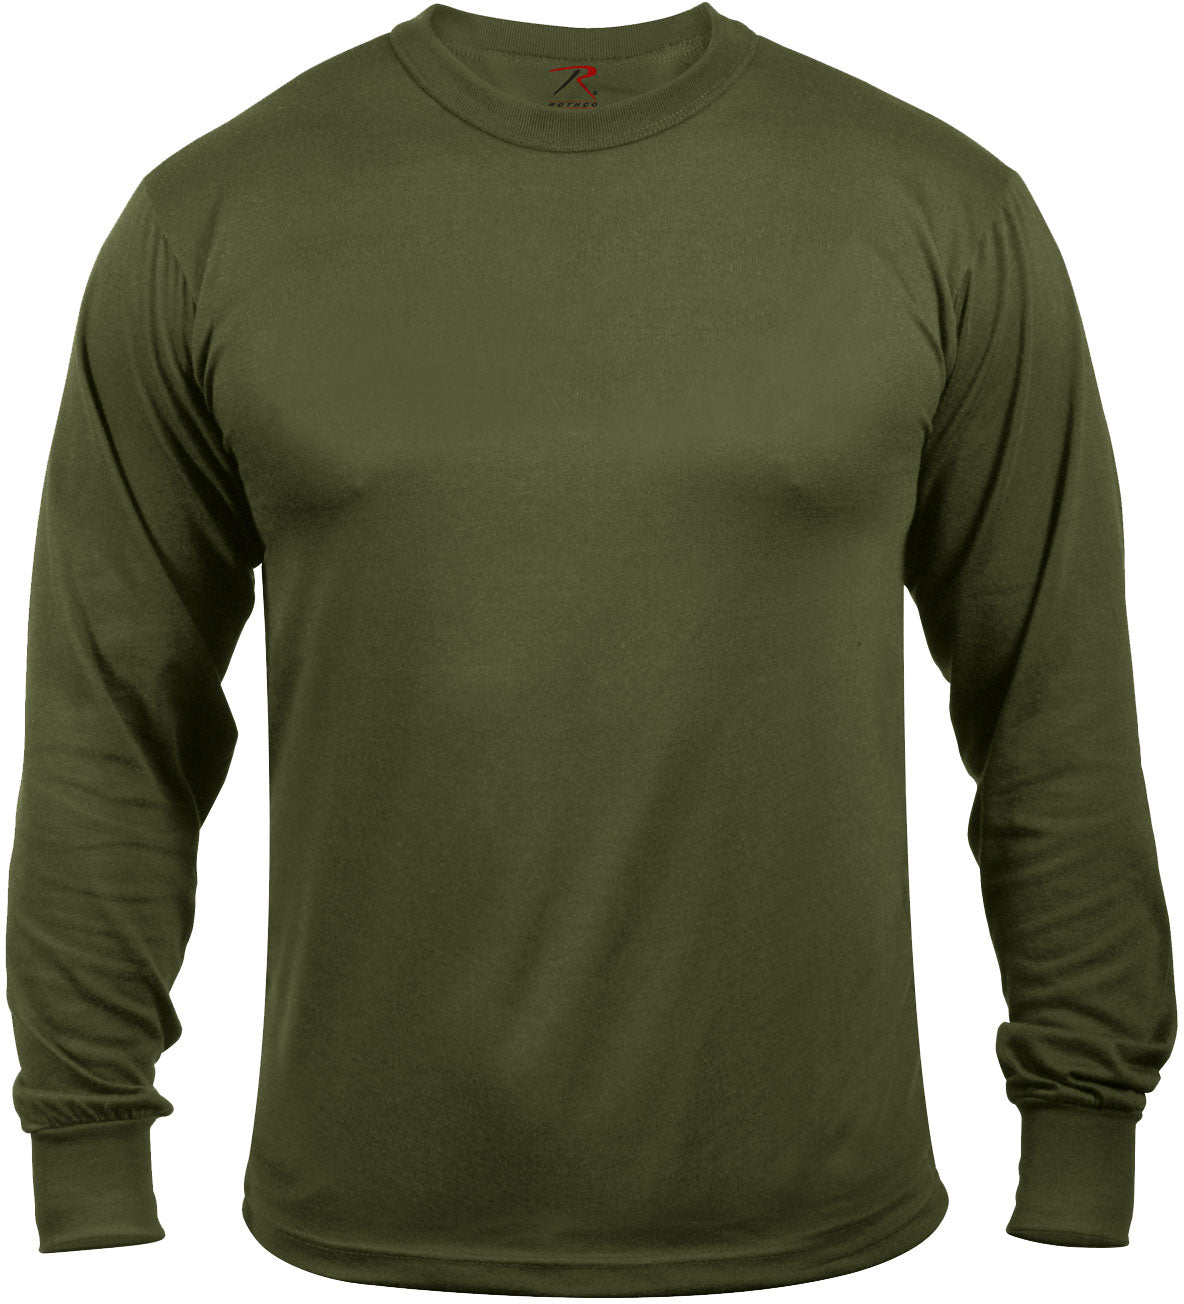 Olive Drab - Moisture Wicking Long Sleeve T-Shirt